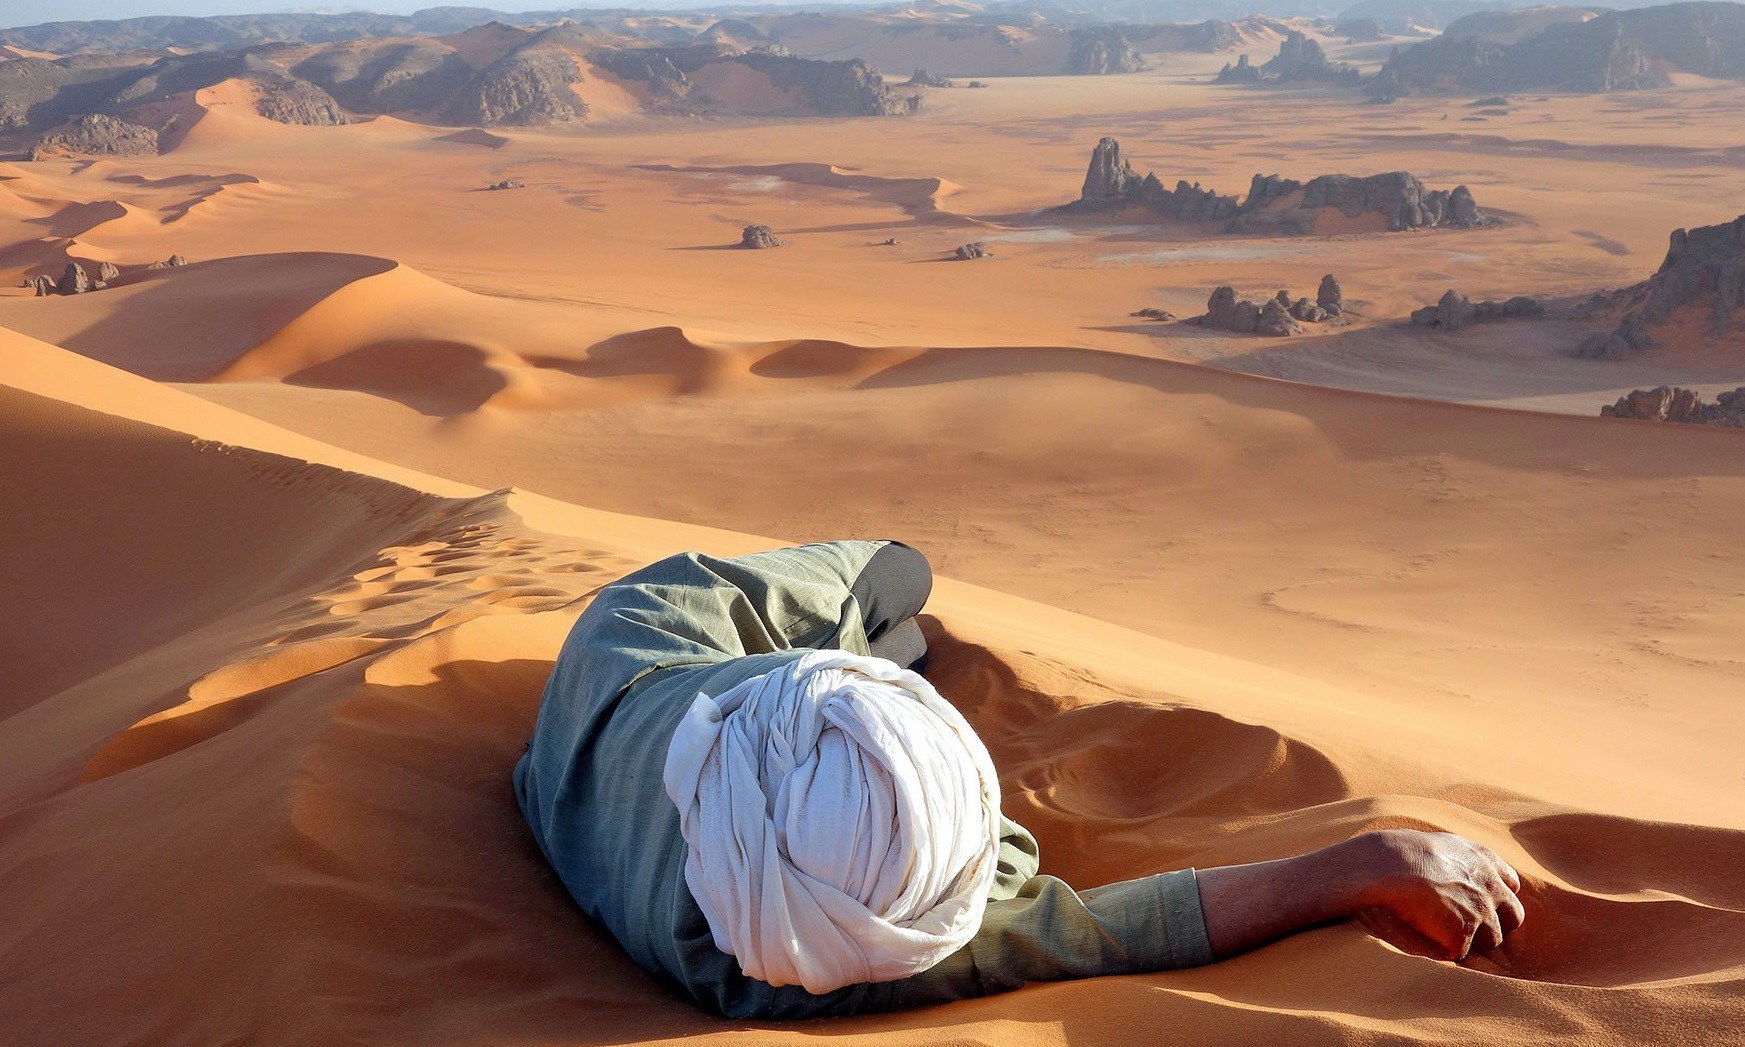 migrant abandoned in desert by Algeria